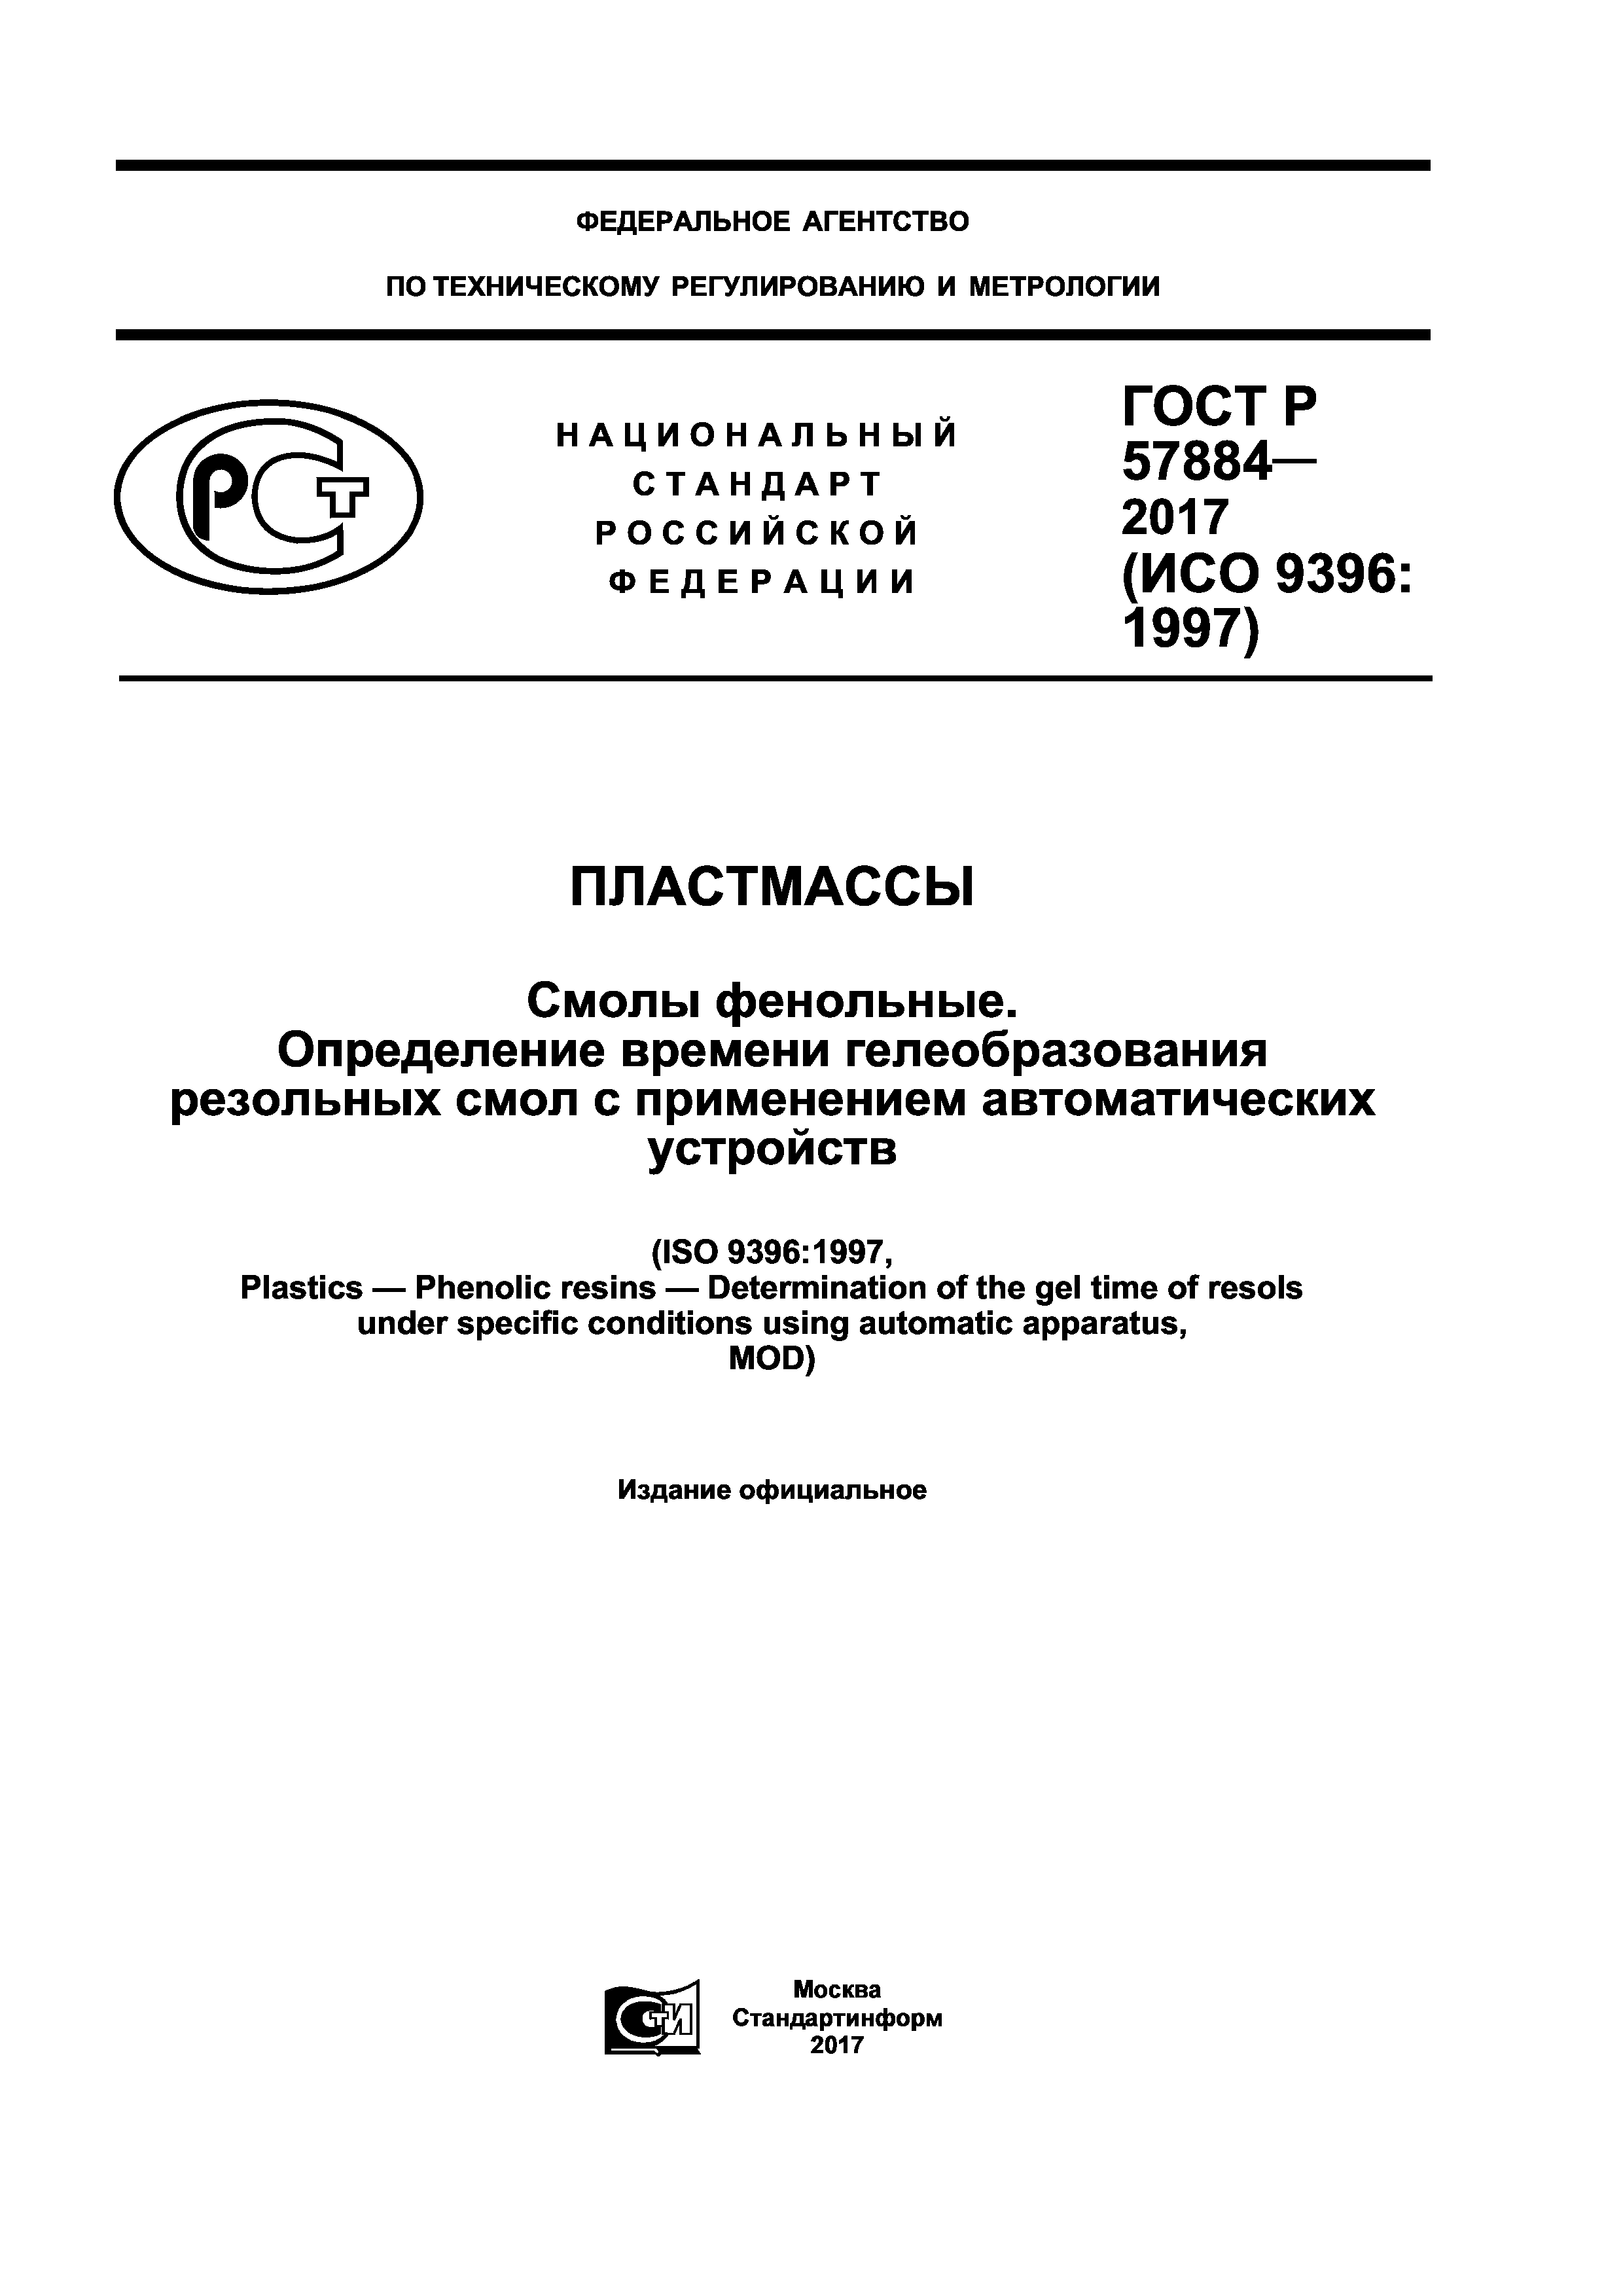 ГОСТ Р 57884-2017